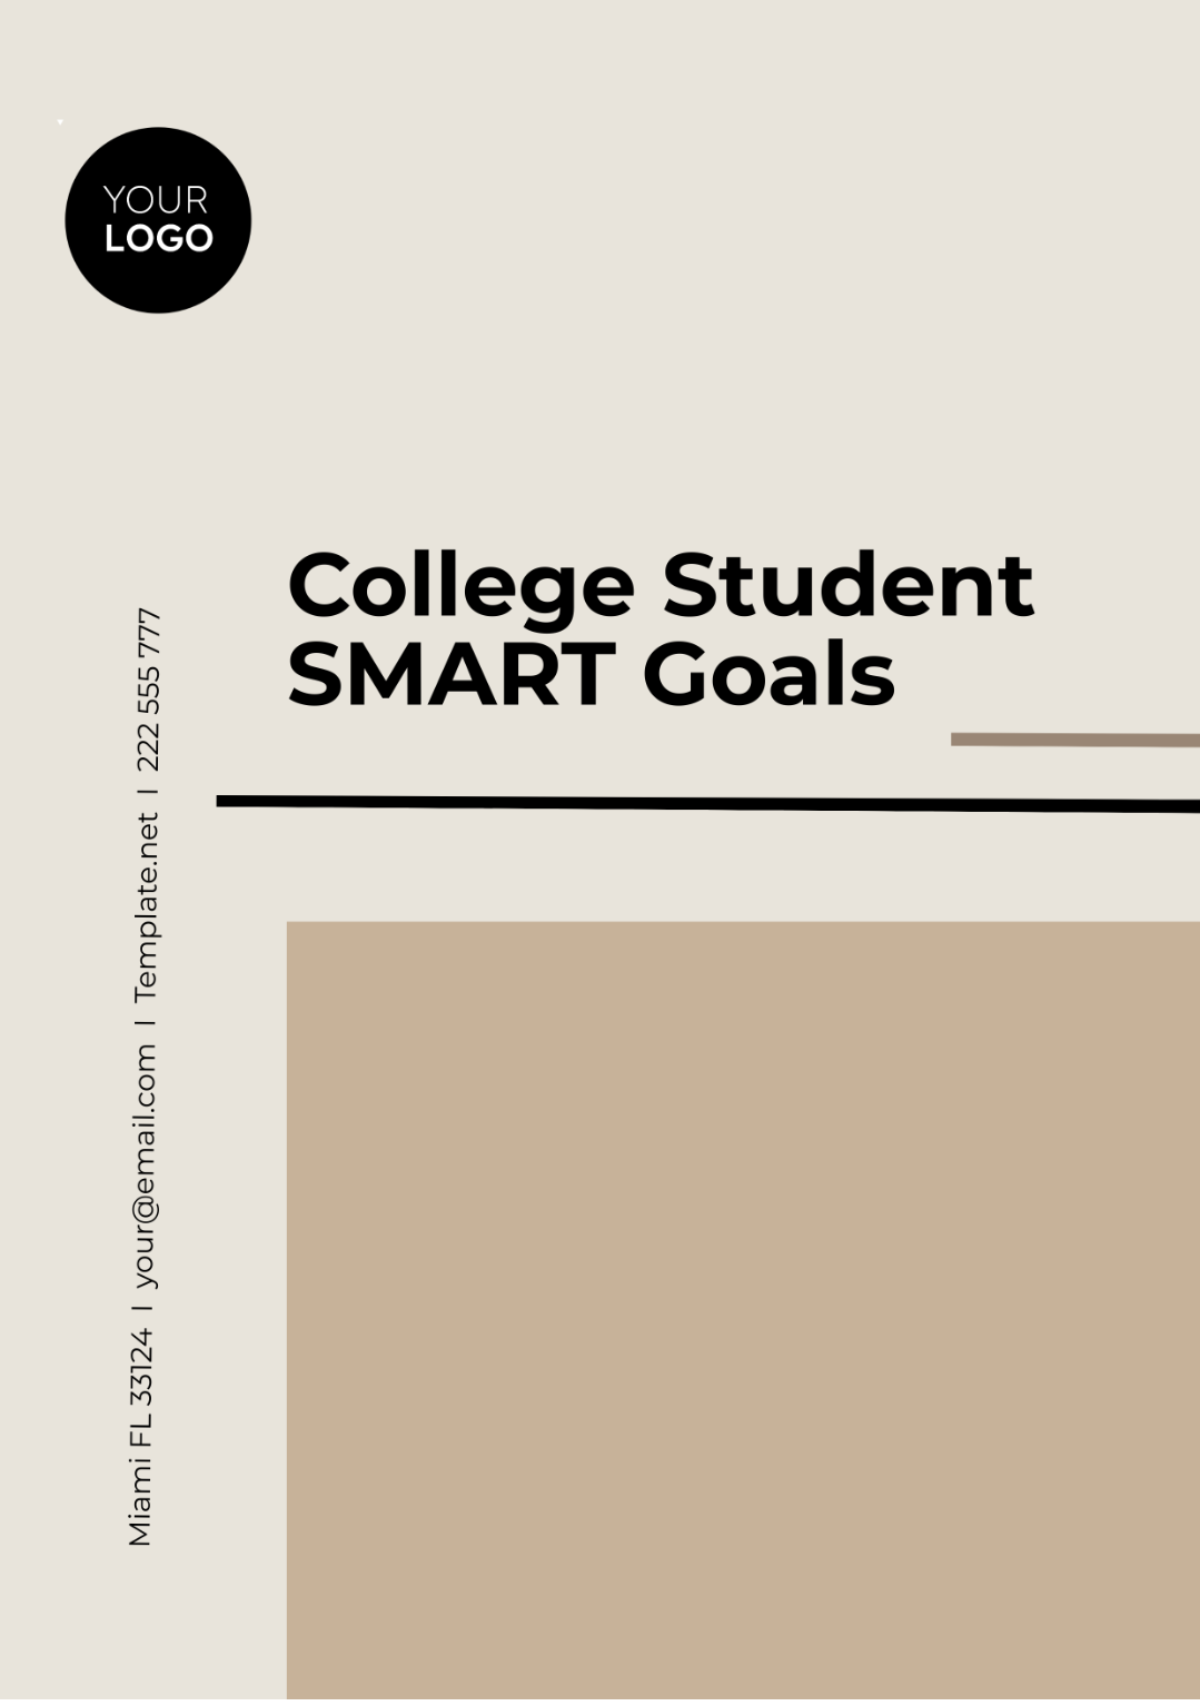 College Student SMART Goals Template